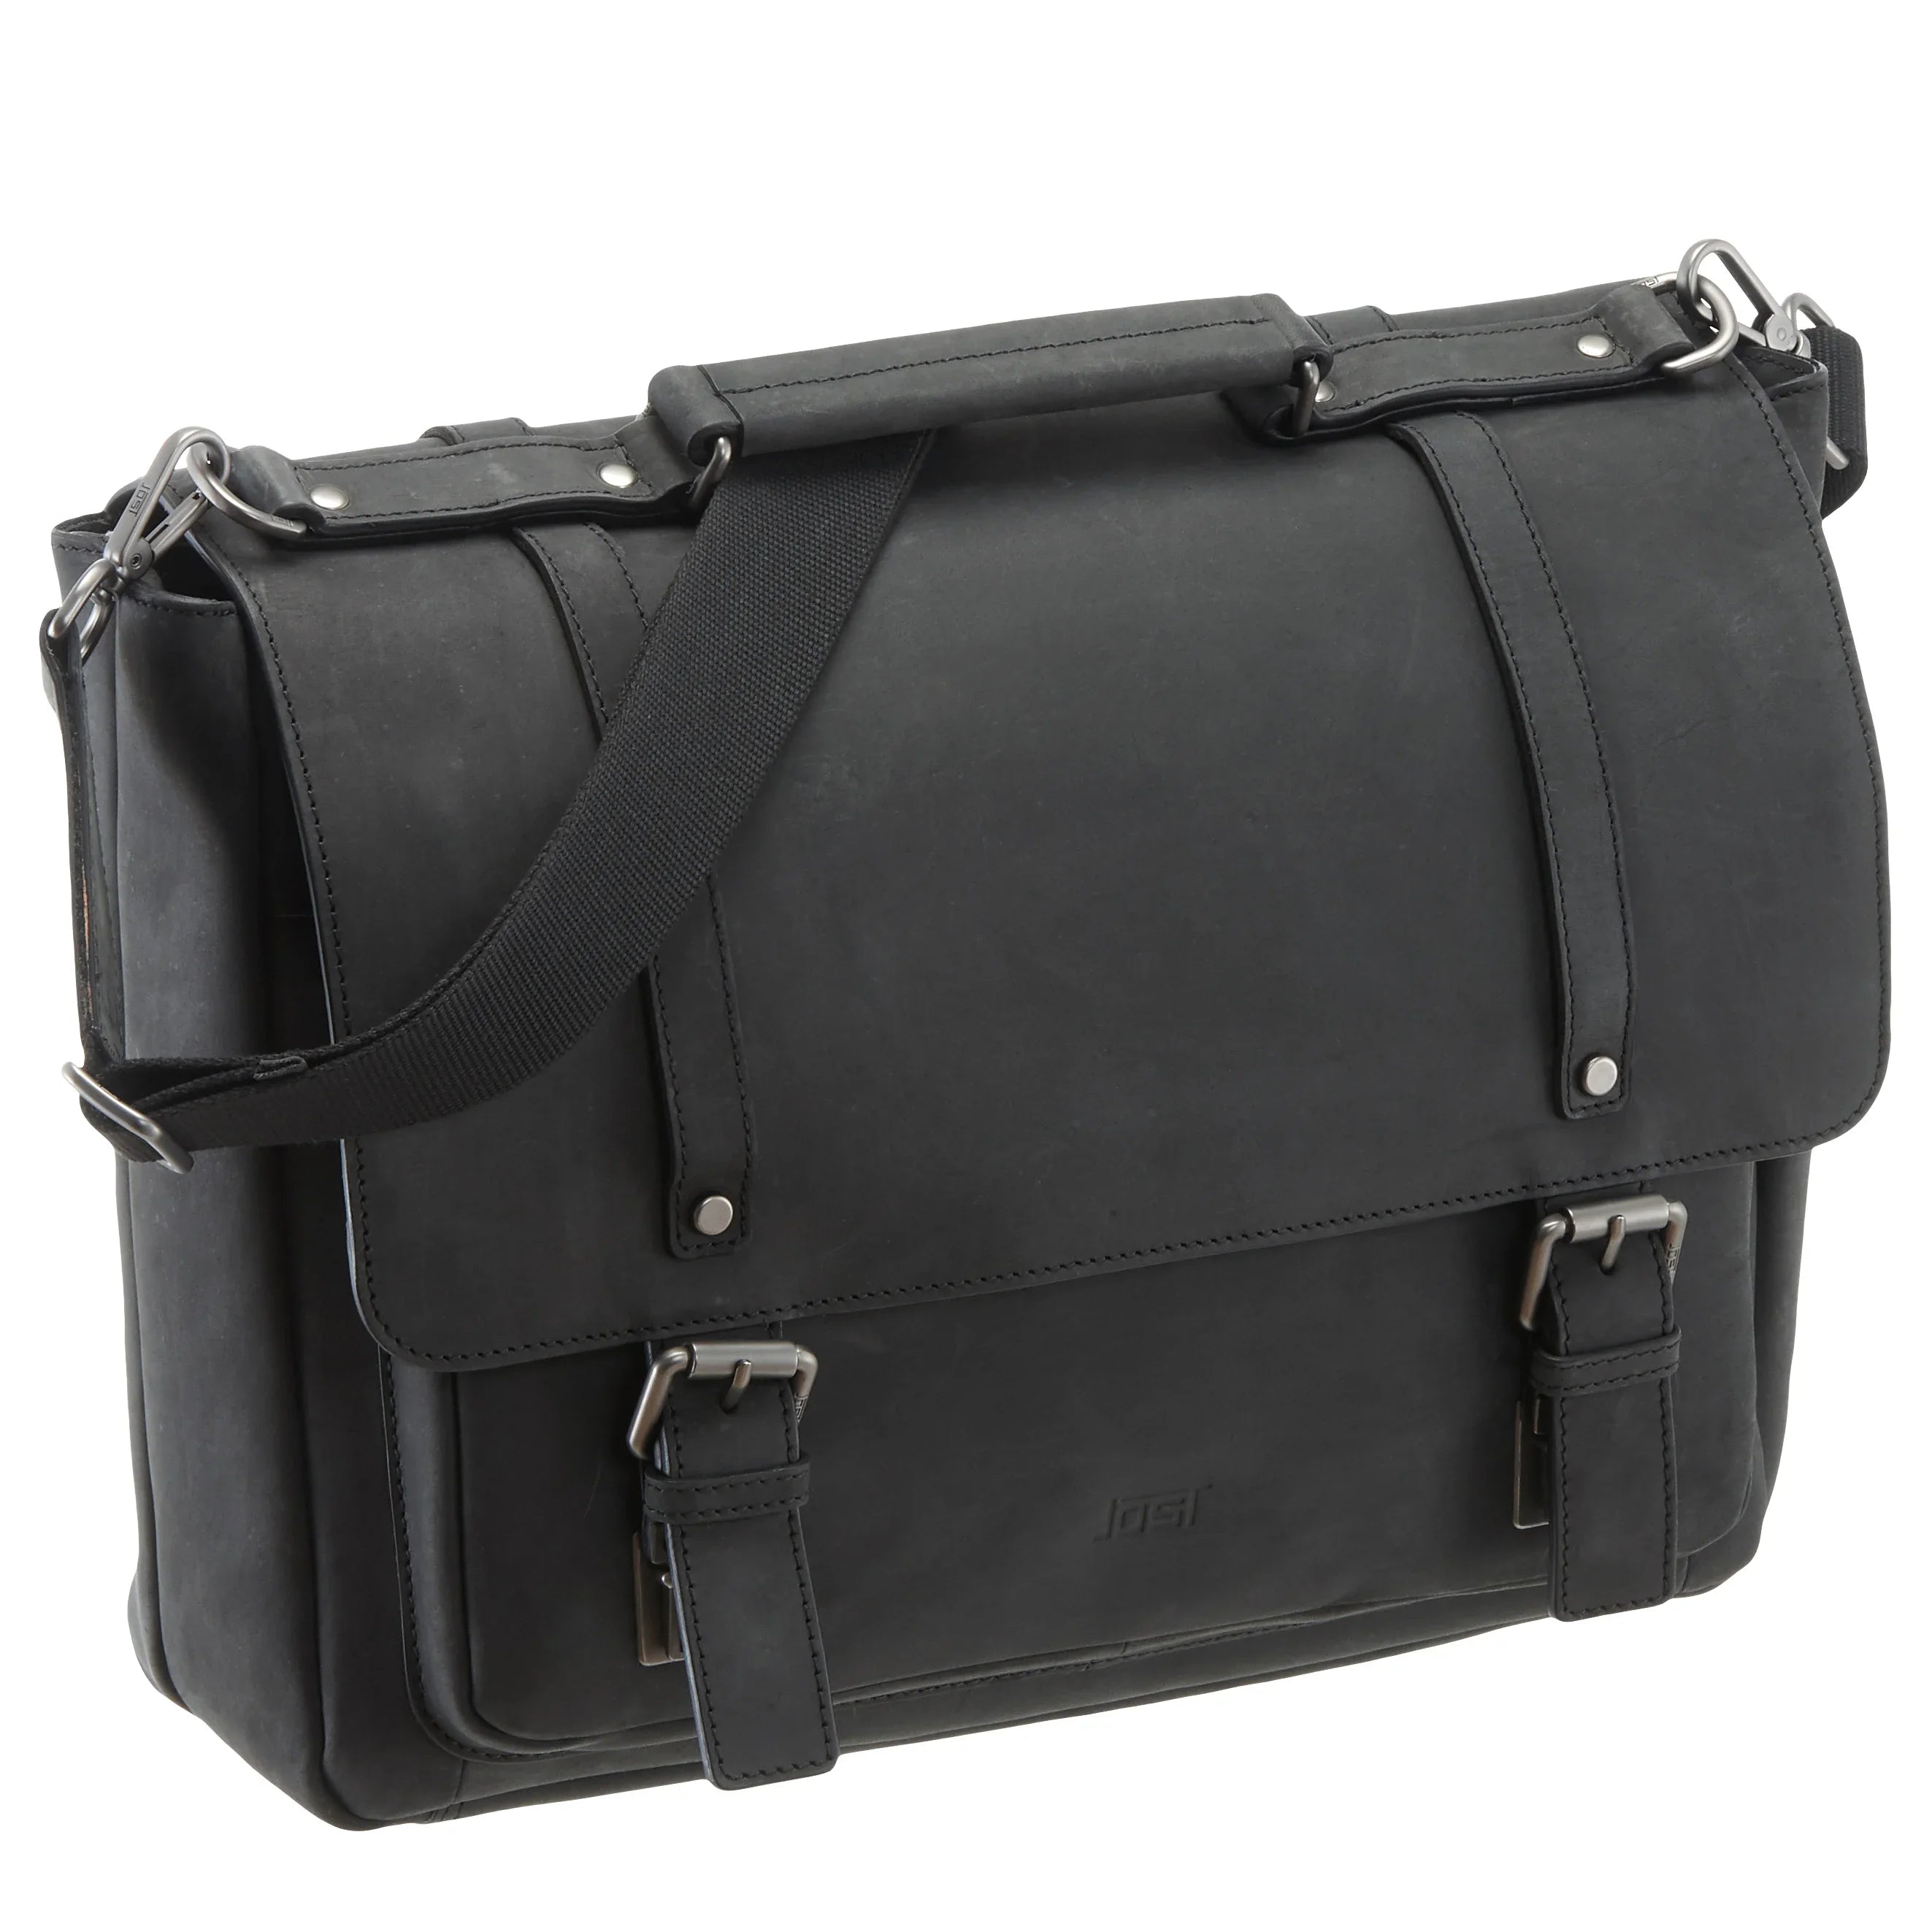 Jost Salo business bag 40 cm - black